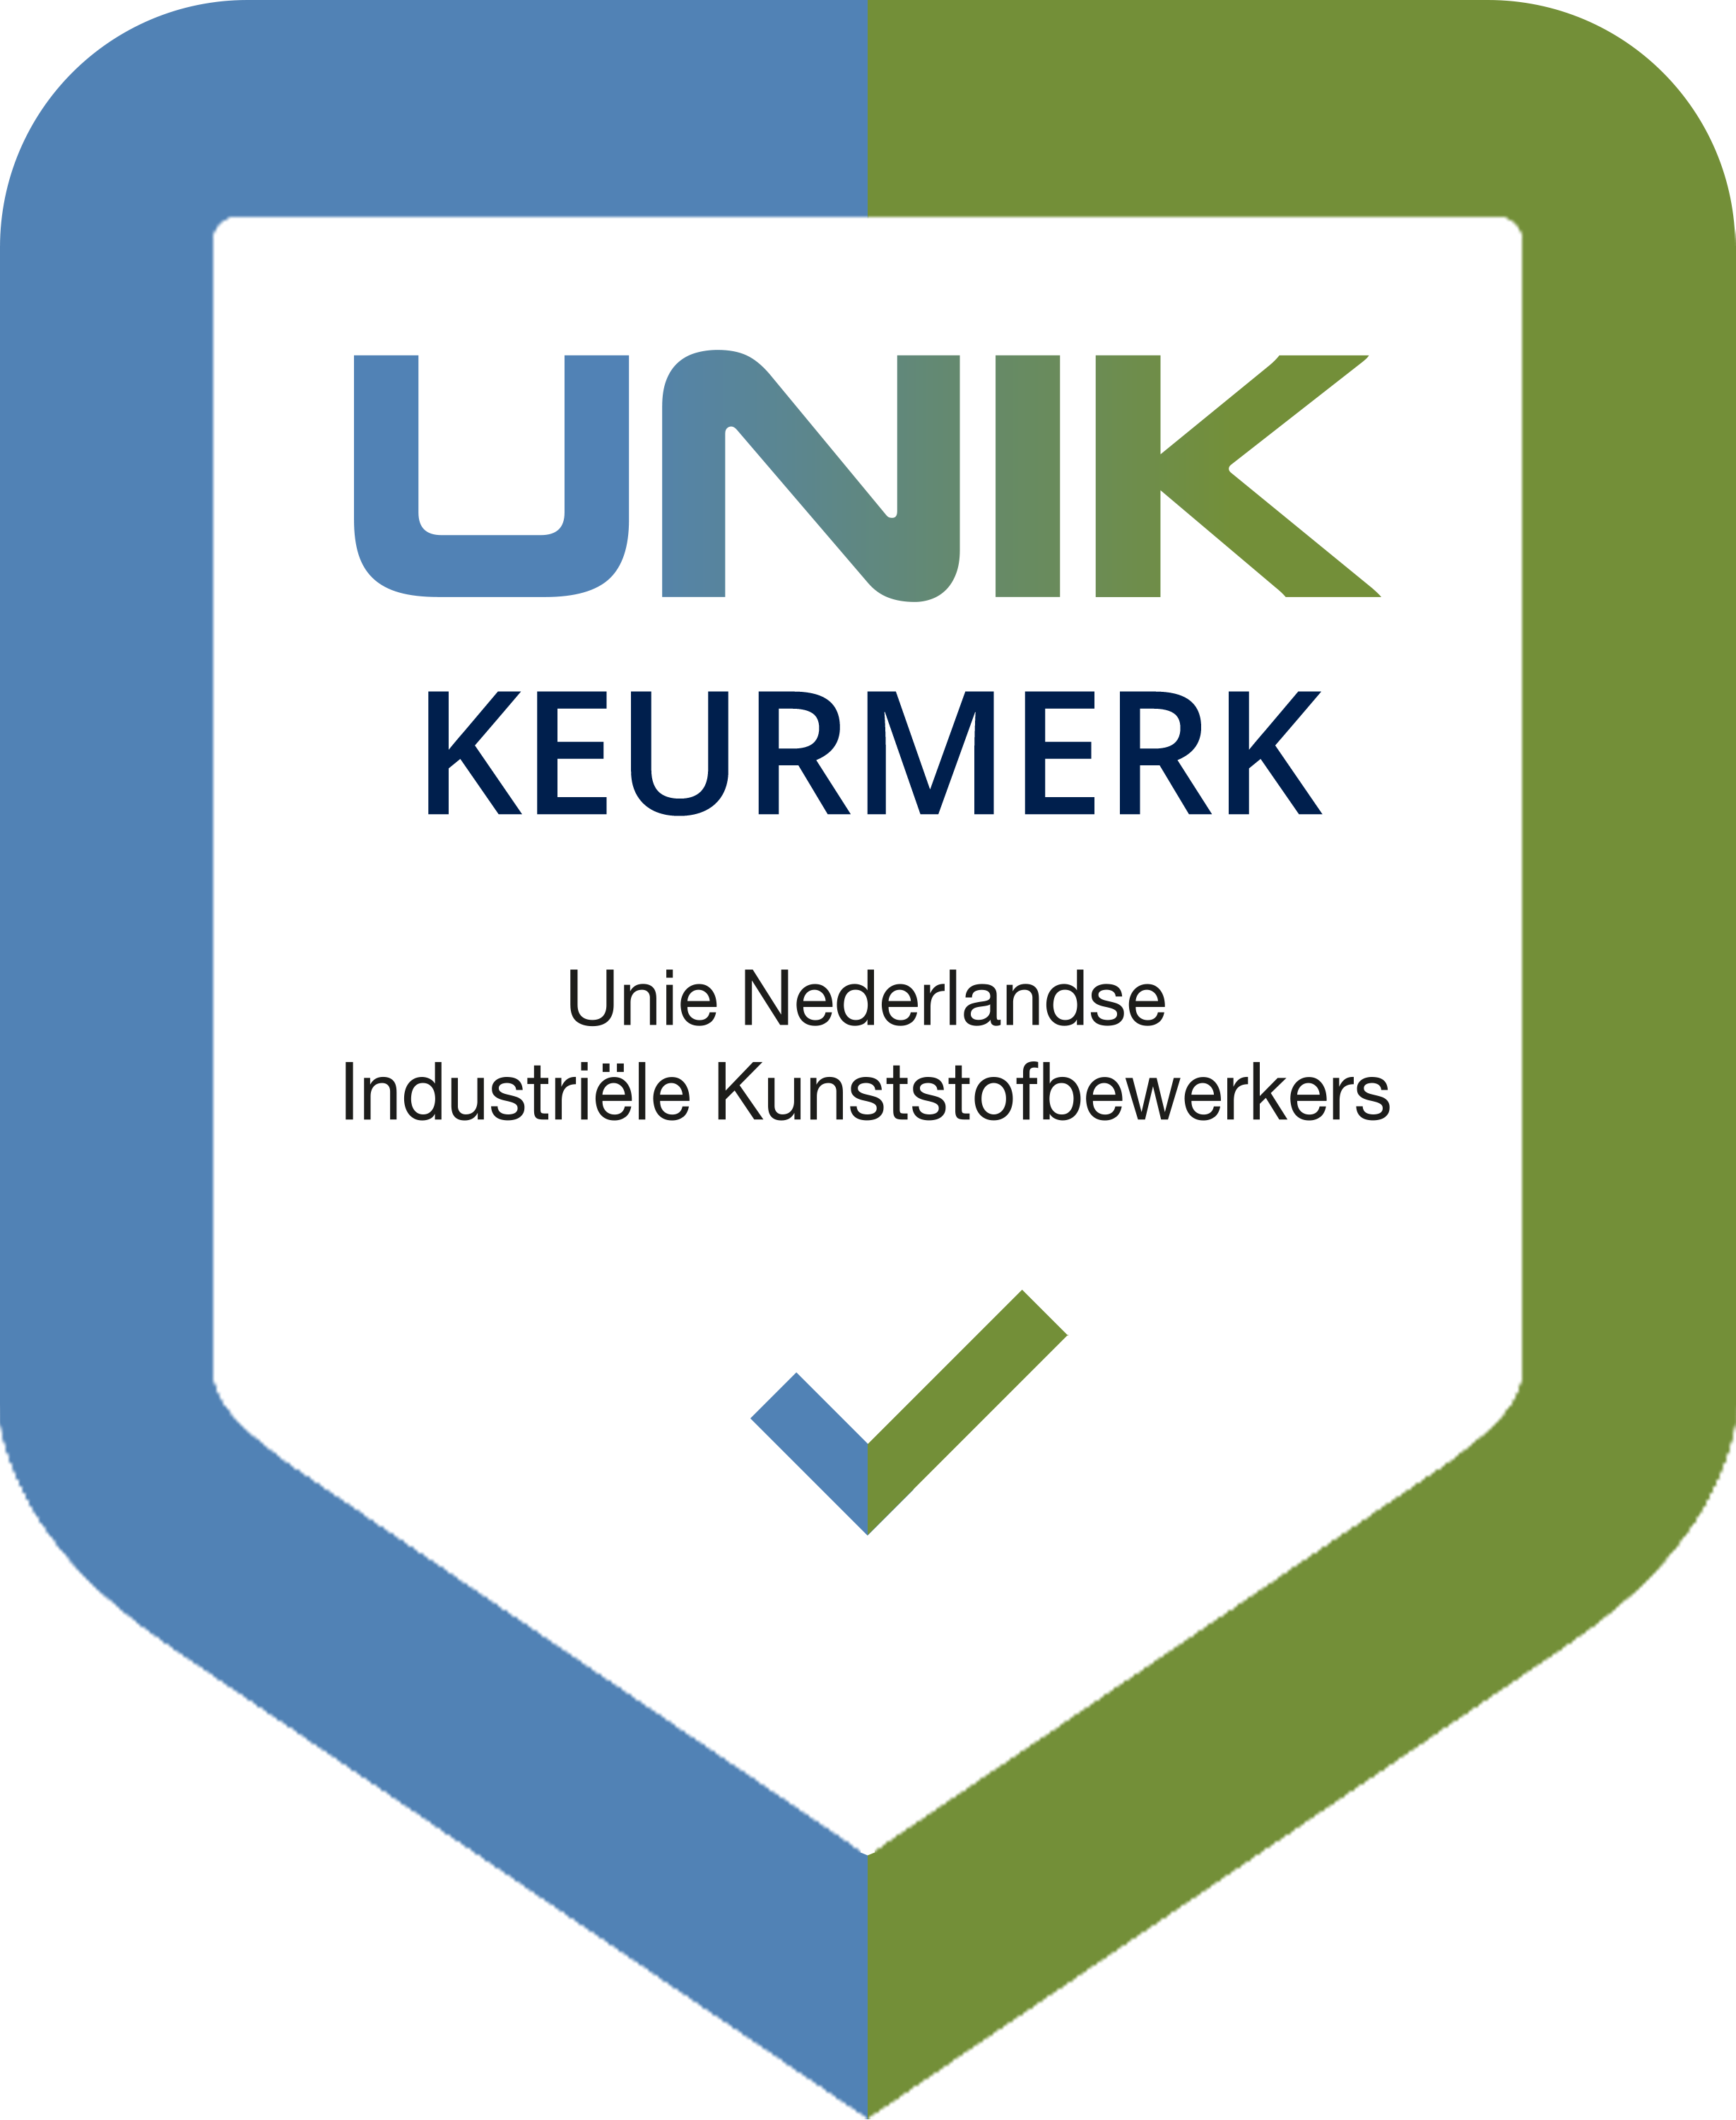 unik keurmerk logo